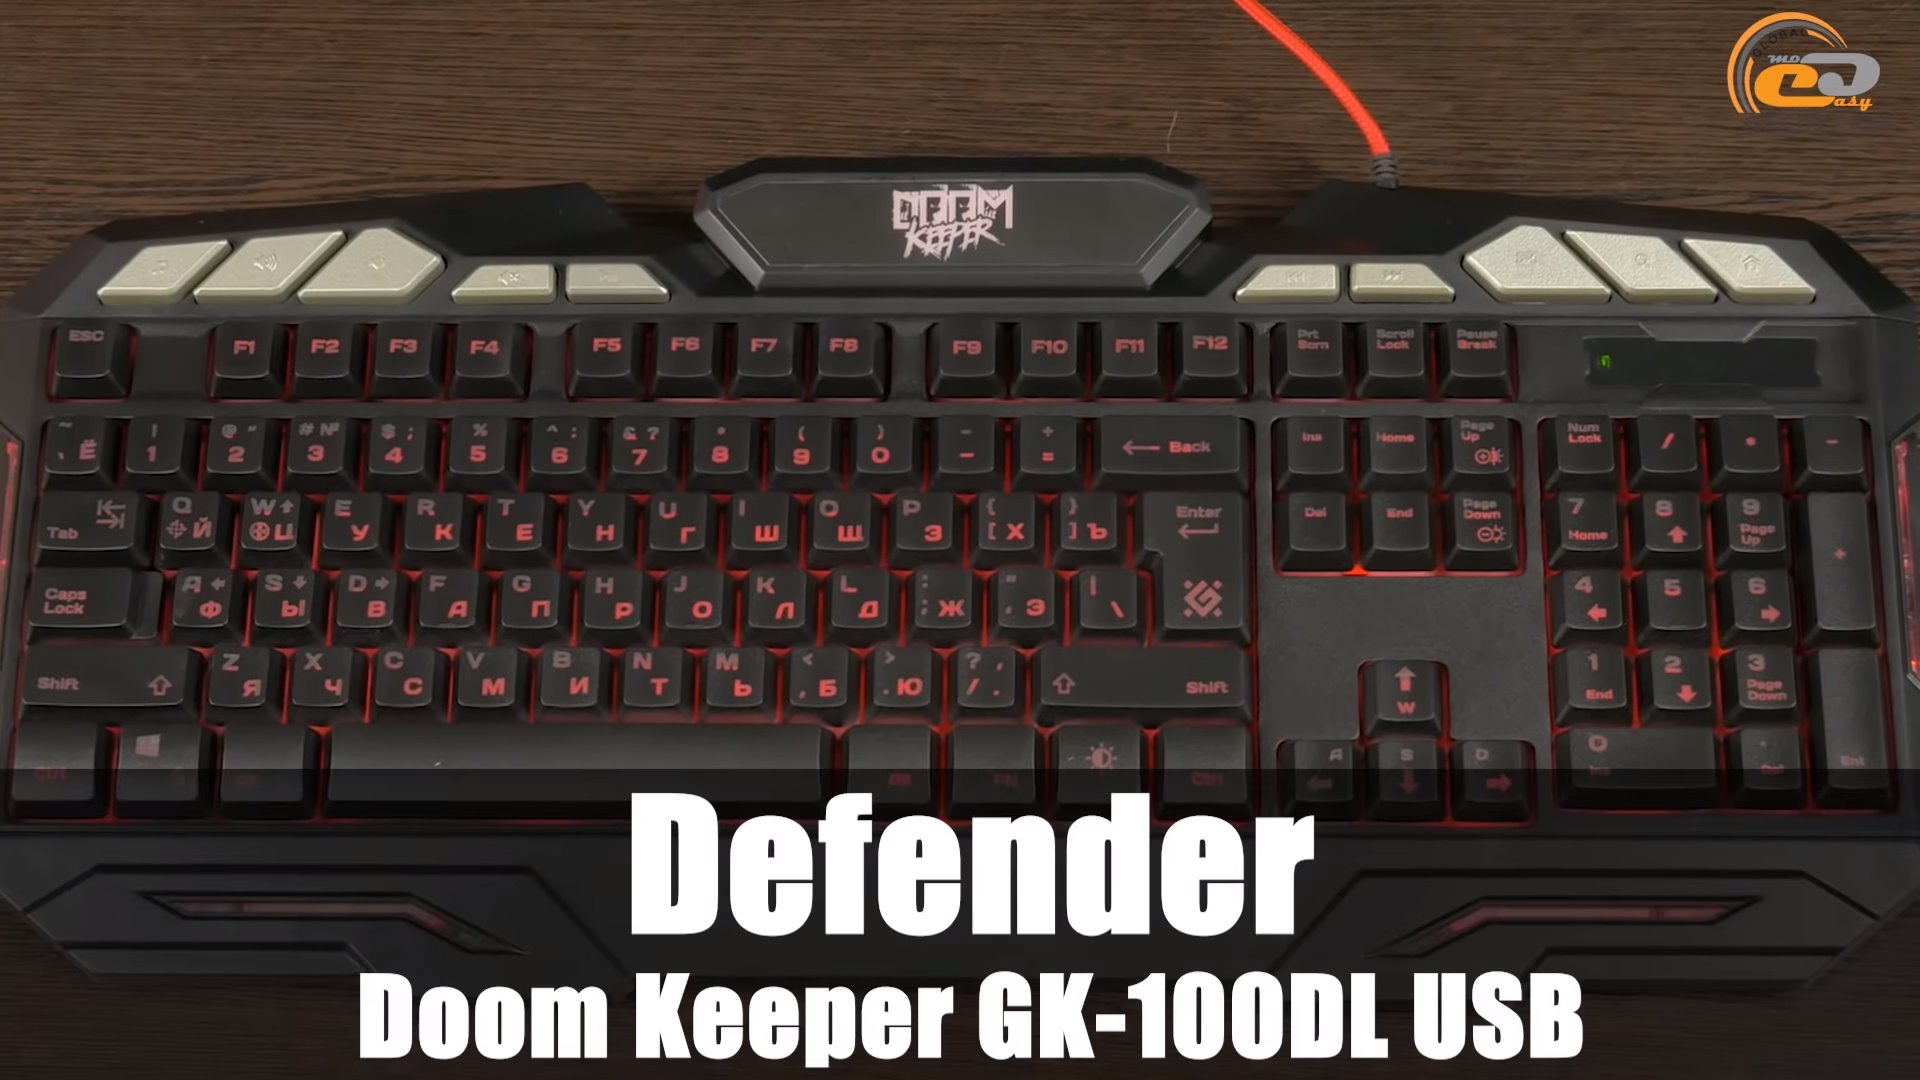 Defender keeper. Клавиатура Doom Keeper. Клавиатура Defender Doom Keeper. Defender Doom Keeper GK-100dl. Раскладка клавиатуры Doom Keeper.